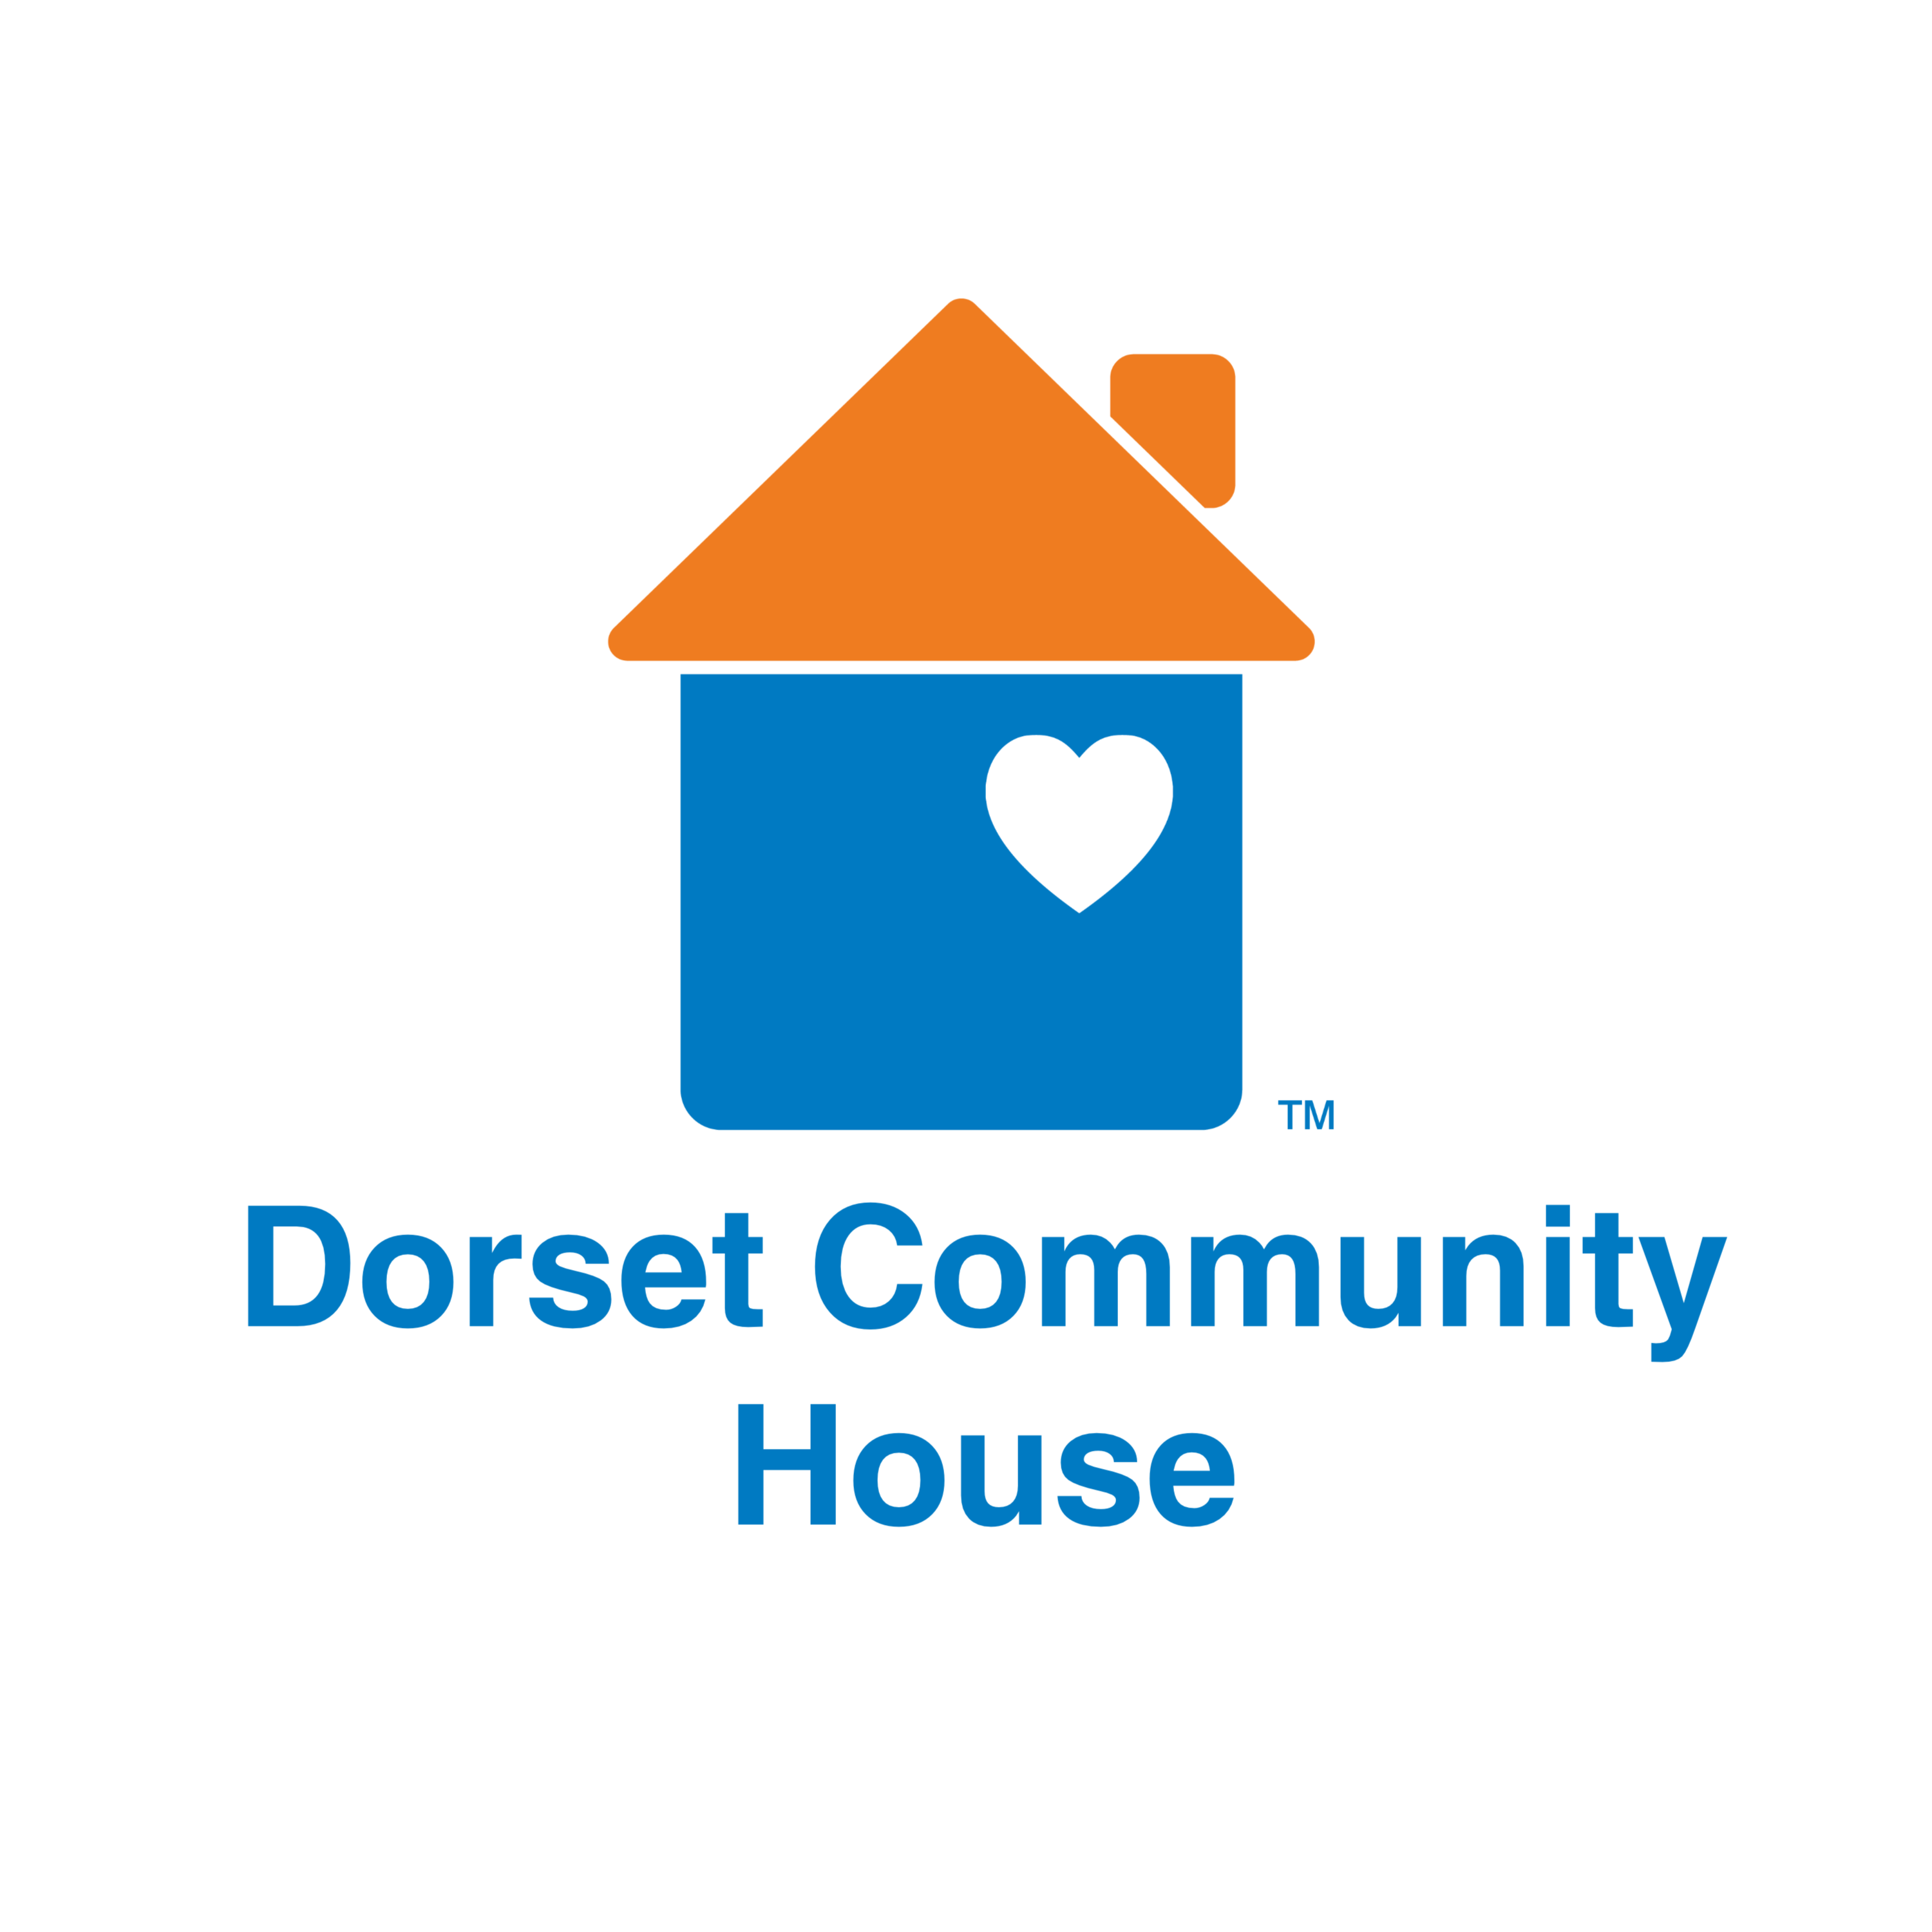 Dorset House